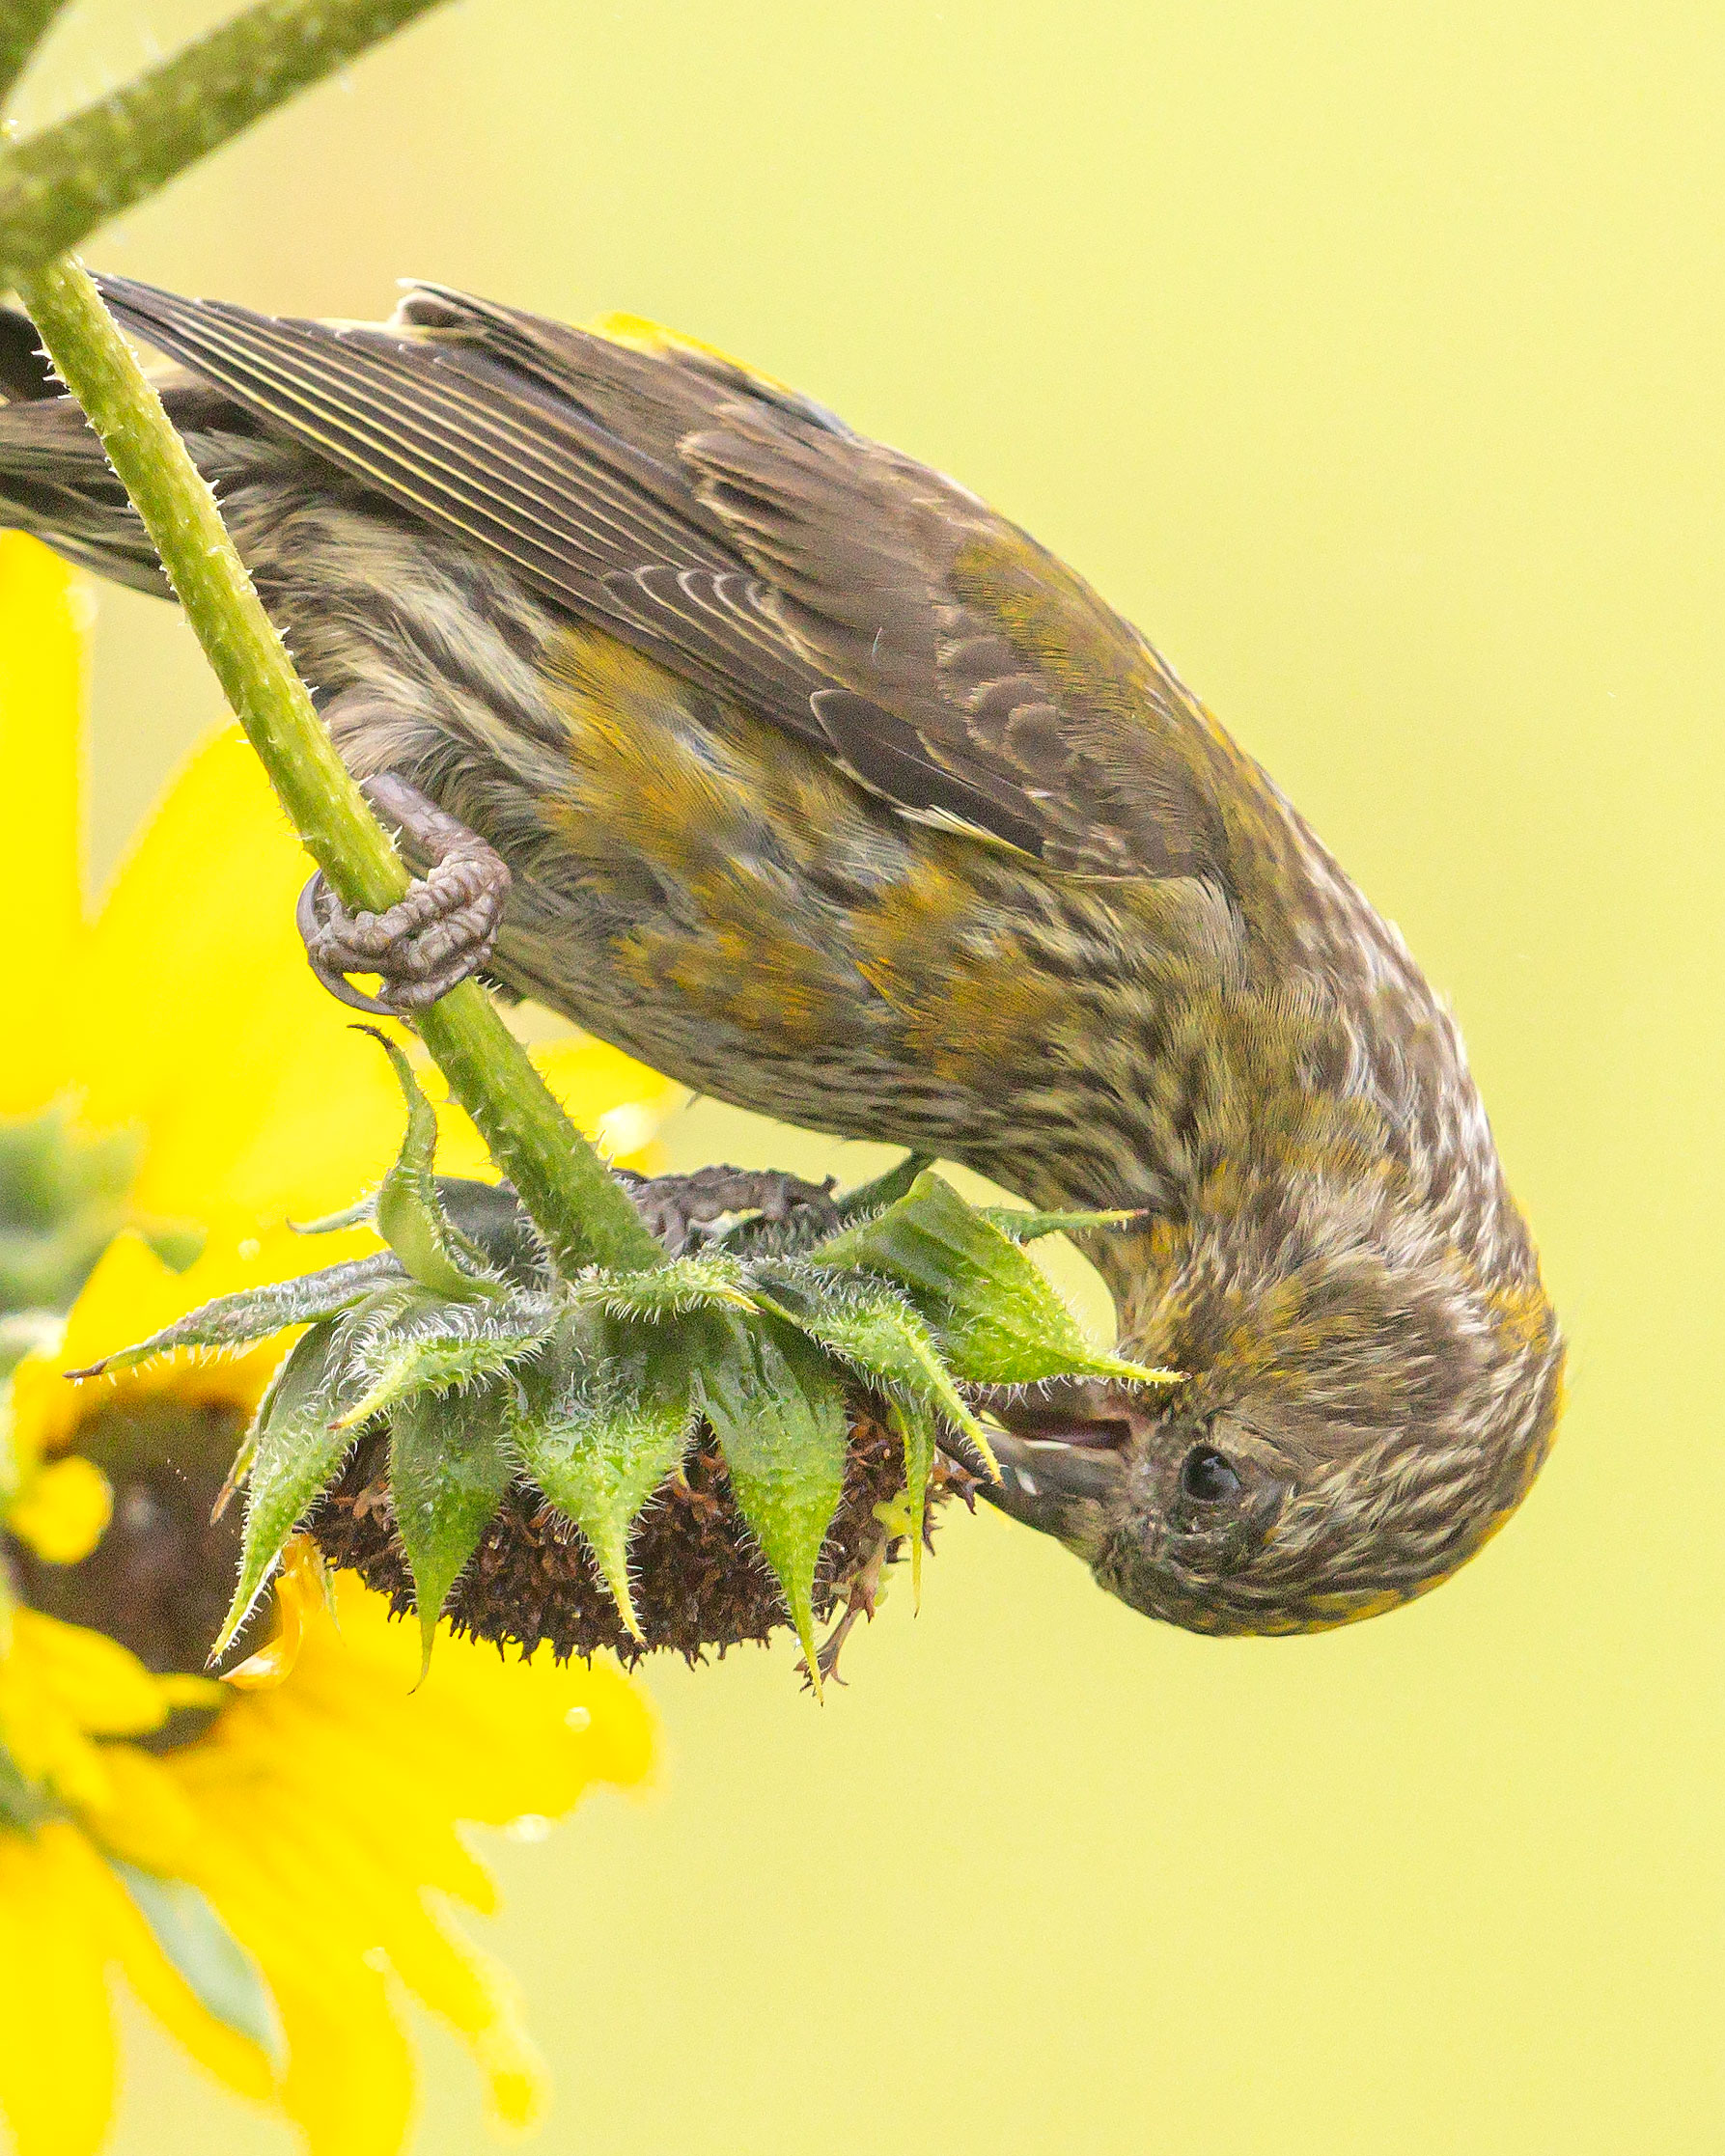 Bird eating sunflower